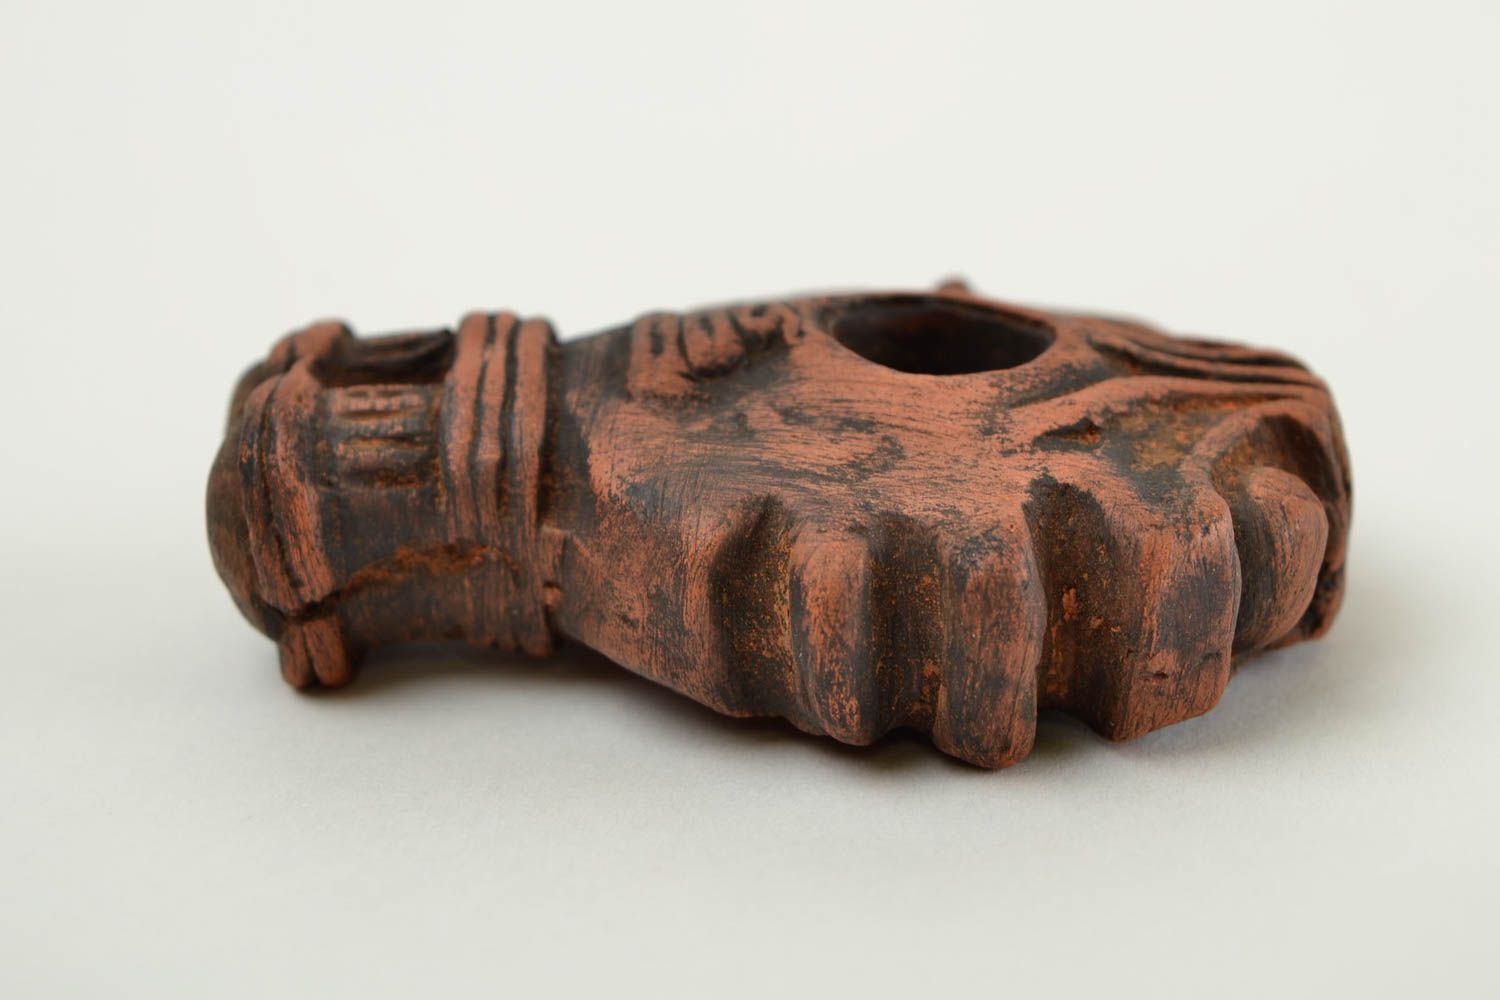 Handmade ceramic tobacco pipe smoking pipe sculpture art pottery works photo 5